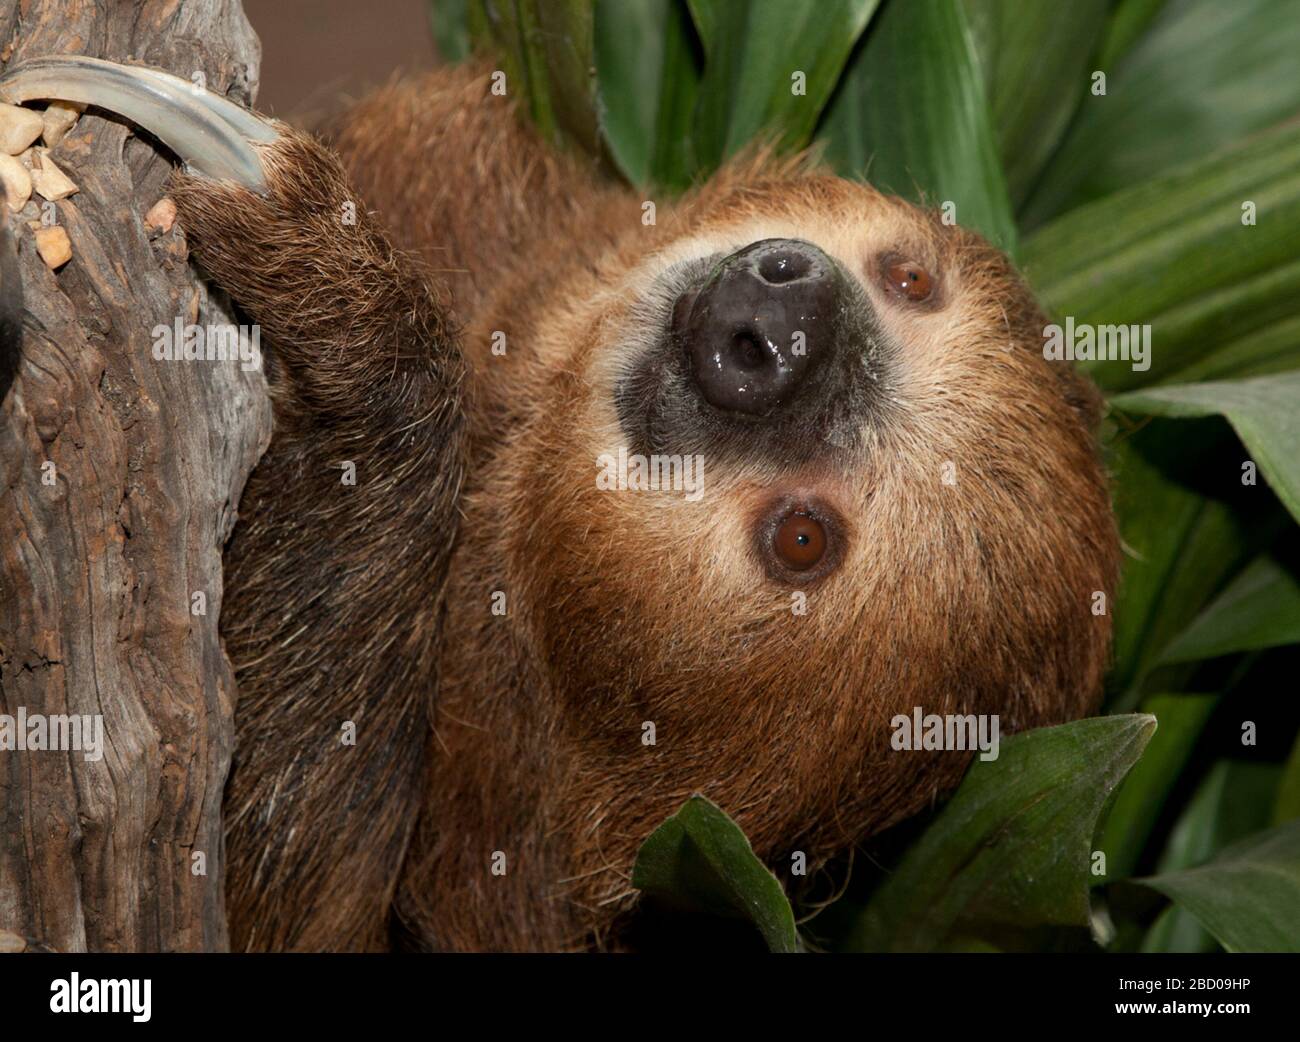 Linnes Twotoed Sloth. Species: didactylus,Genus: Choloepus,Family: Megalonychidae,Order: Pilosa,Class: Mammalia,Phylum: Chordata,Kingdom: Animalia,horizontal,Sloth,Edentate,two-toed sloth,Linne's Two-toed Sloth,Xenarthra,SMH,Small Mammal House Linne's Two-toed Sloth Stock Photo